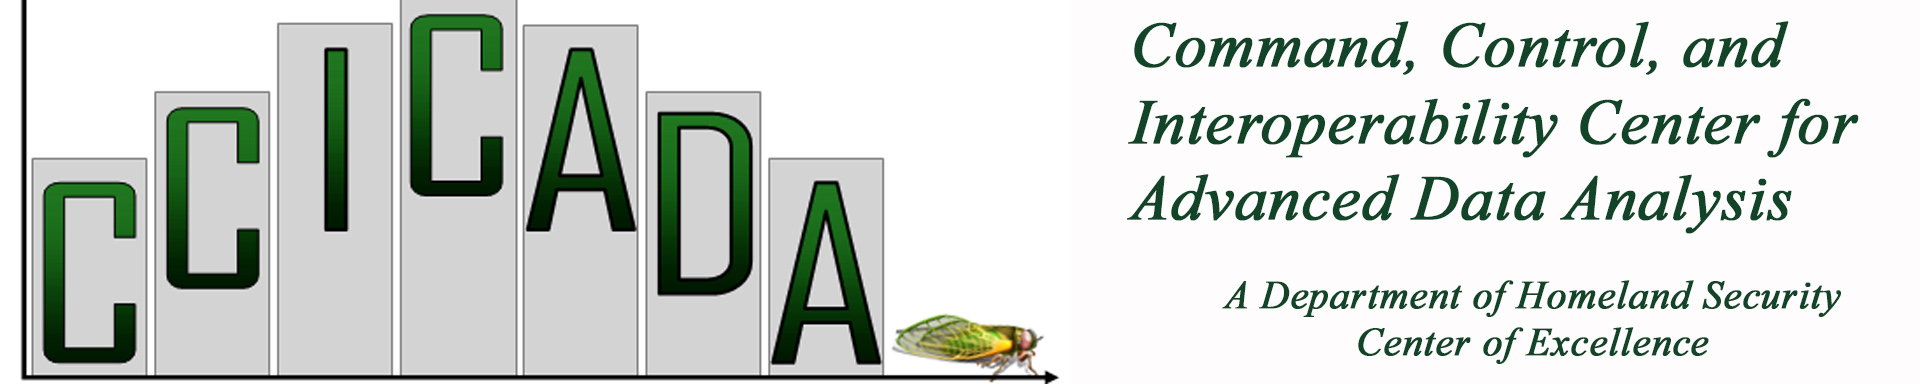 CCICADA_logo